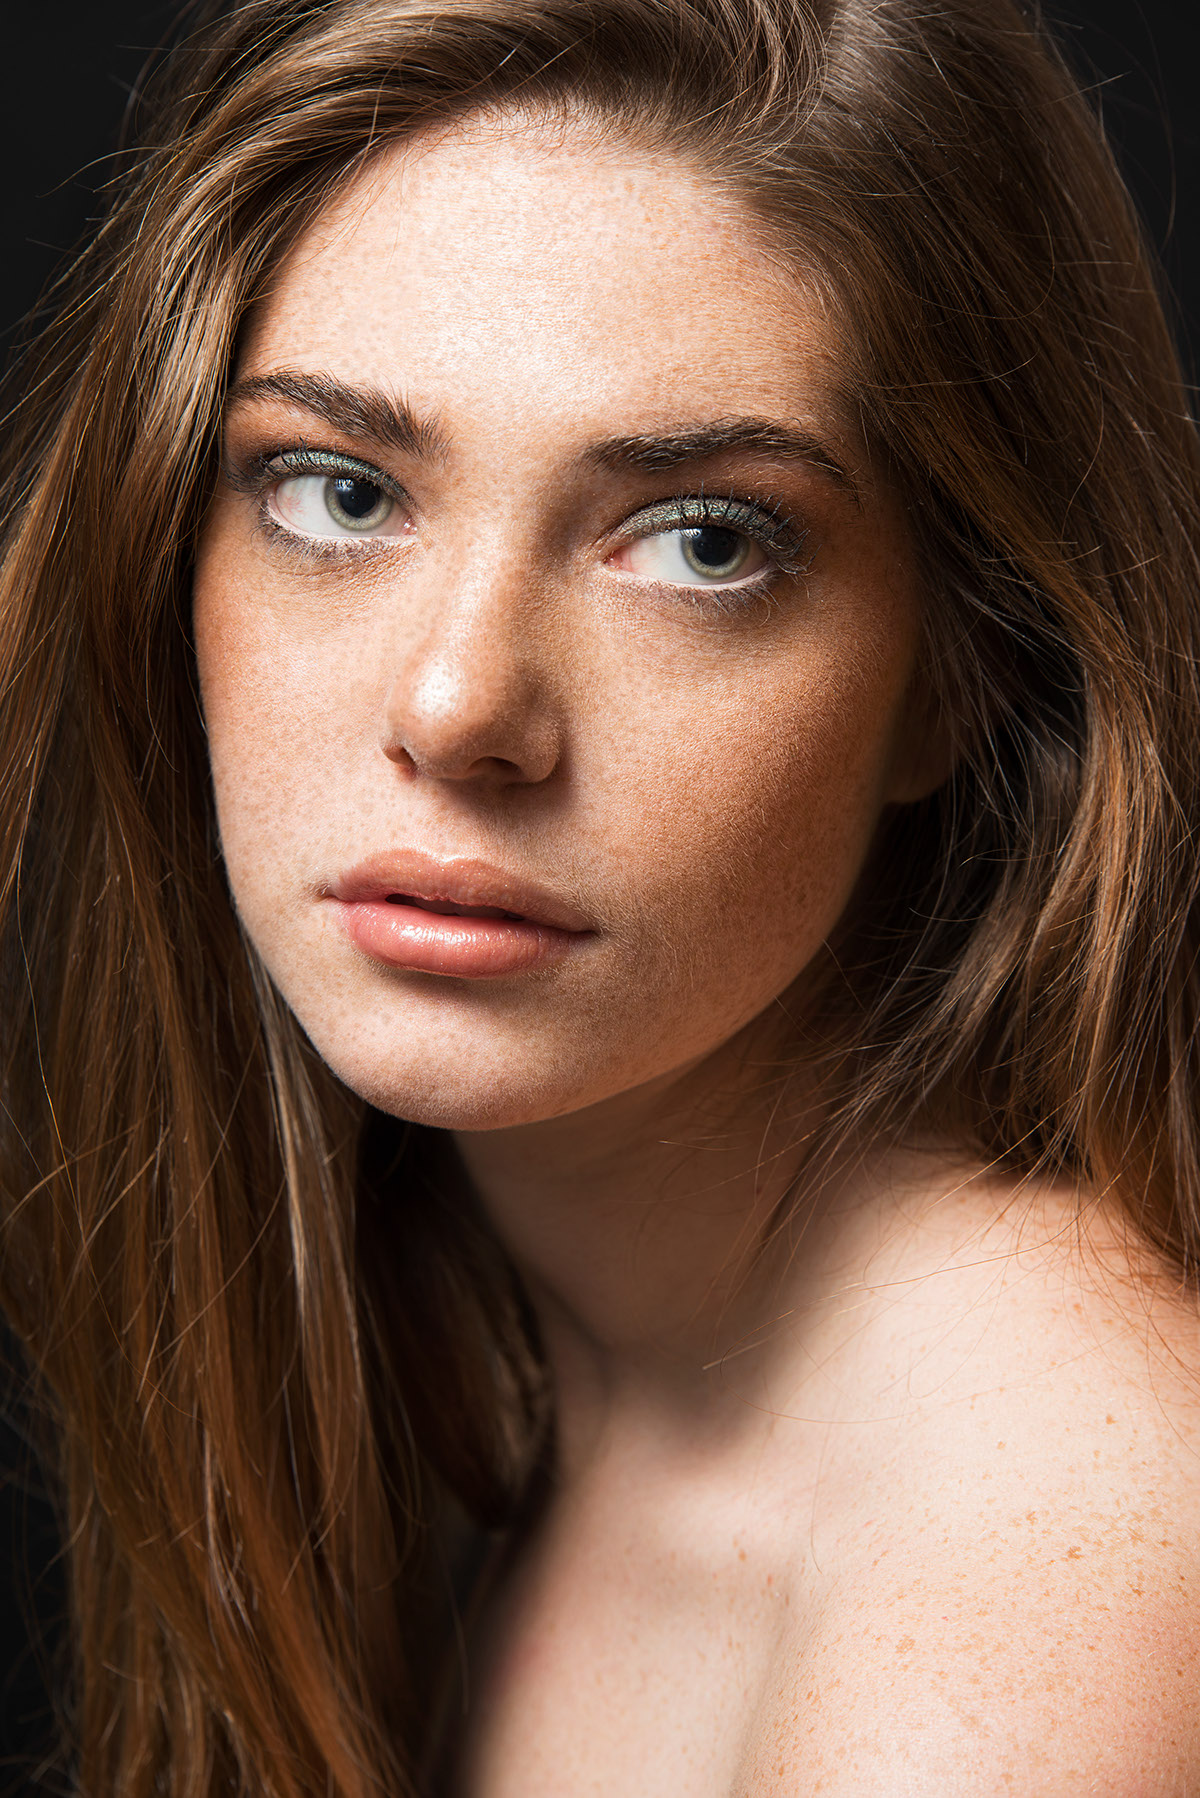 girl model natural skin freckles redhead beauty Beautiful portrait light Make Up lips eyes studio